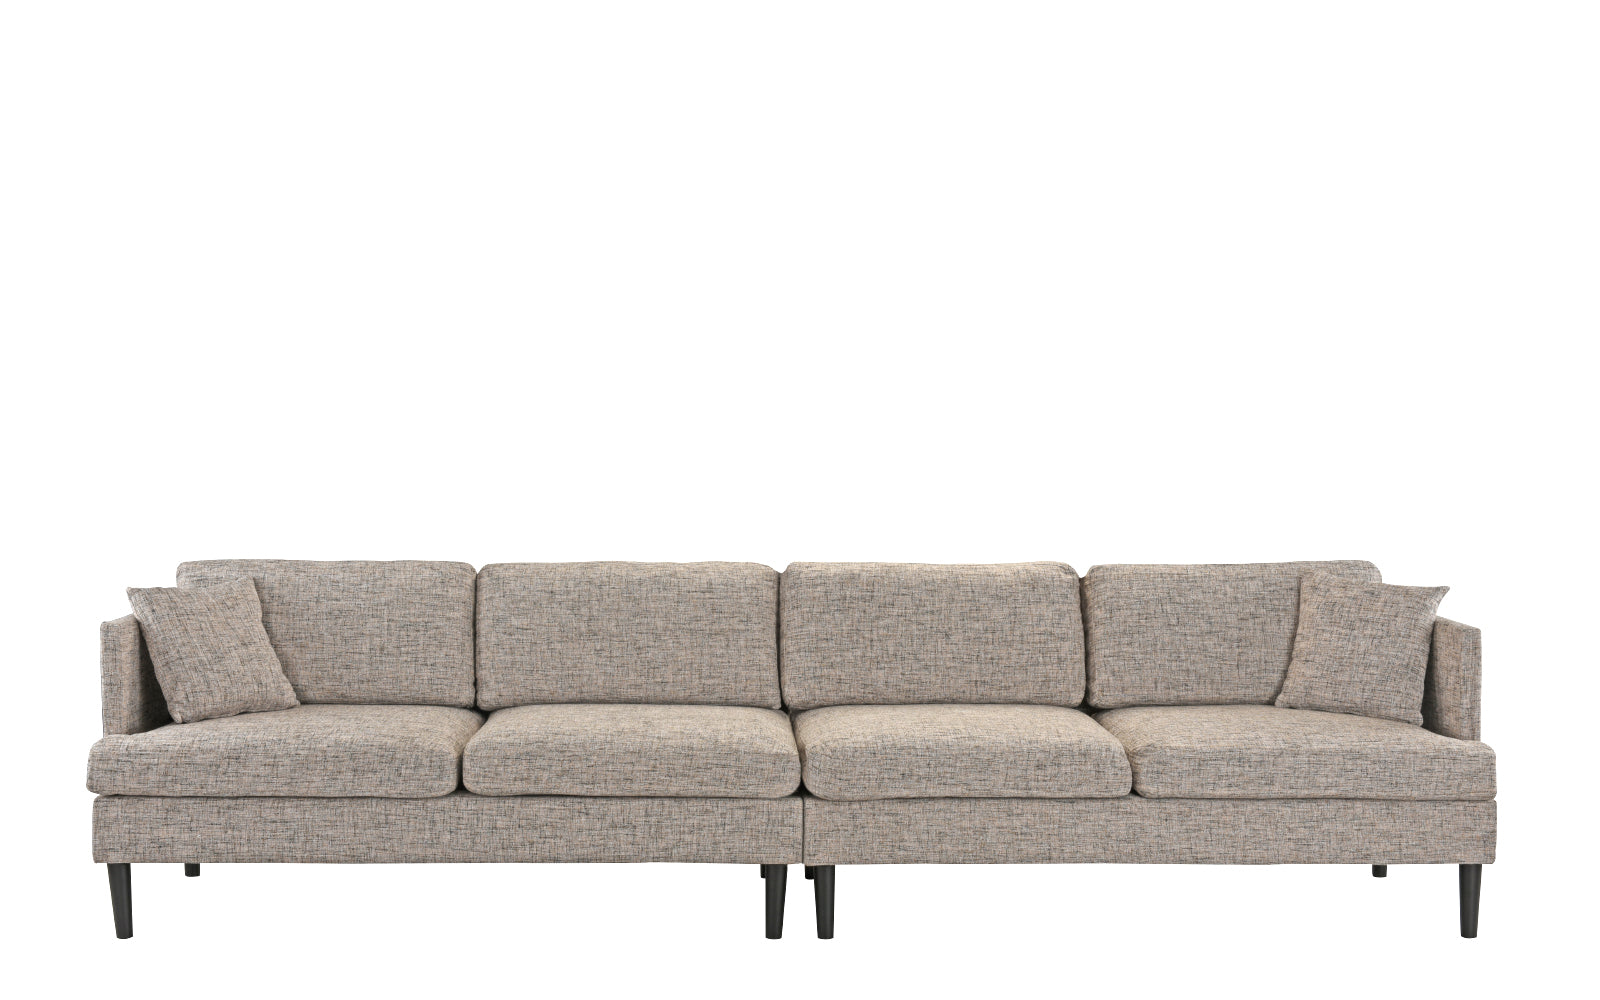 August Modern XL Sofa with Wooden Legs